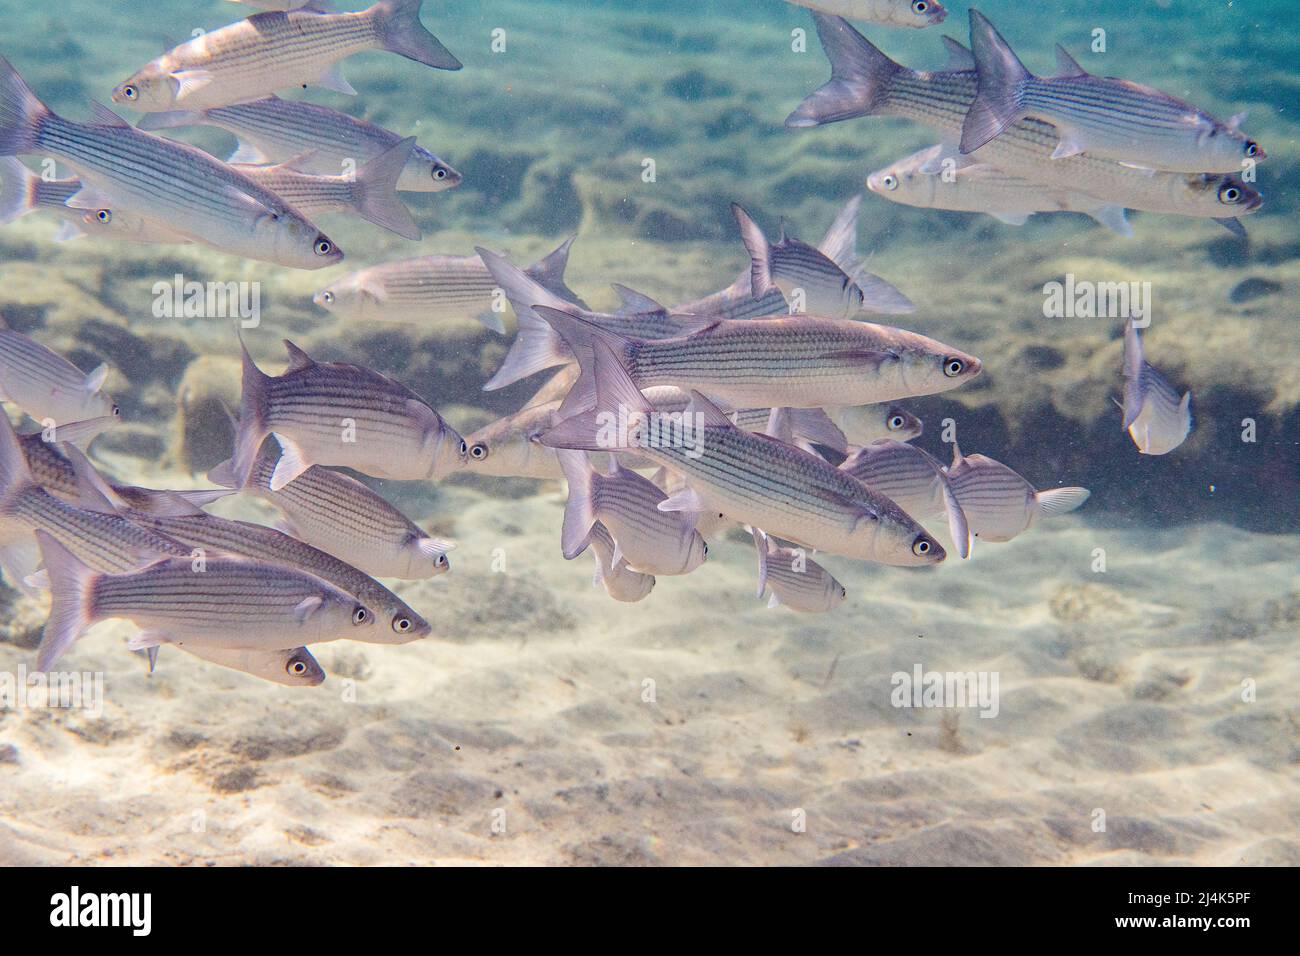 School of thicklip grey mullet, Chelon labrosus, a coastal fish of the family Mugilidae, underwater in Atlantic Ocean. Stock Photo